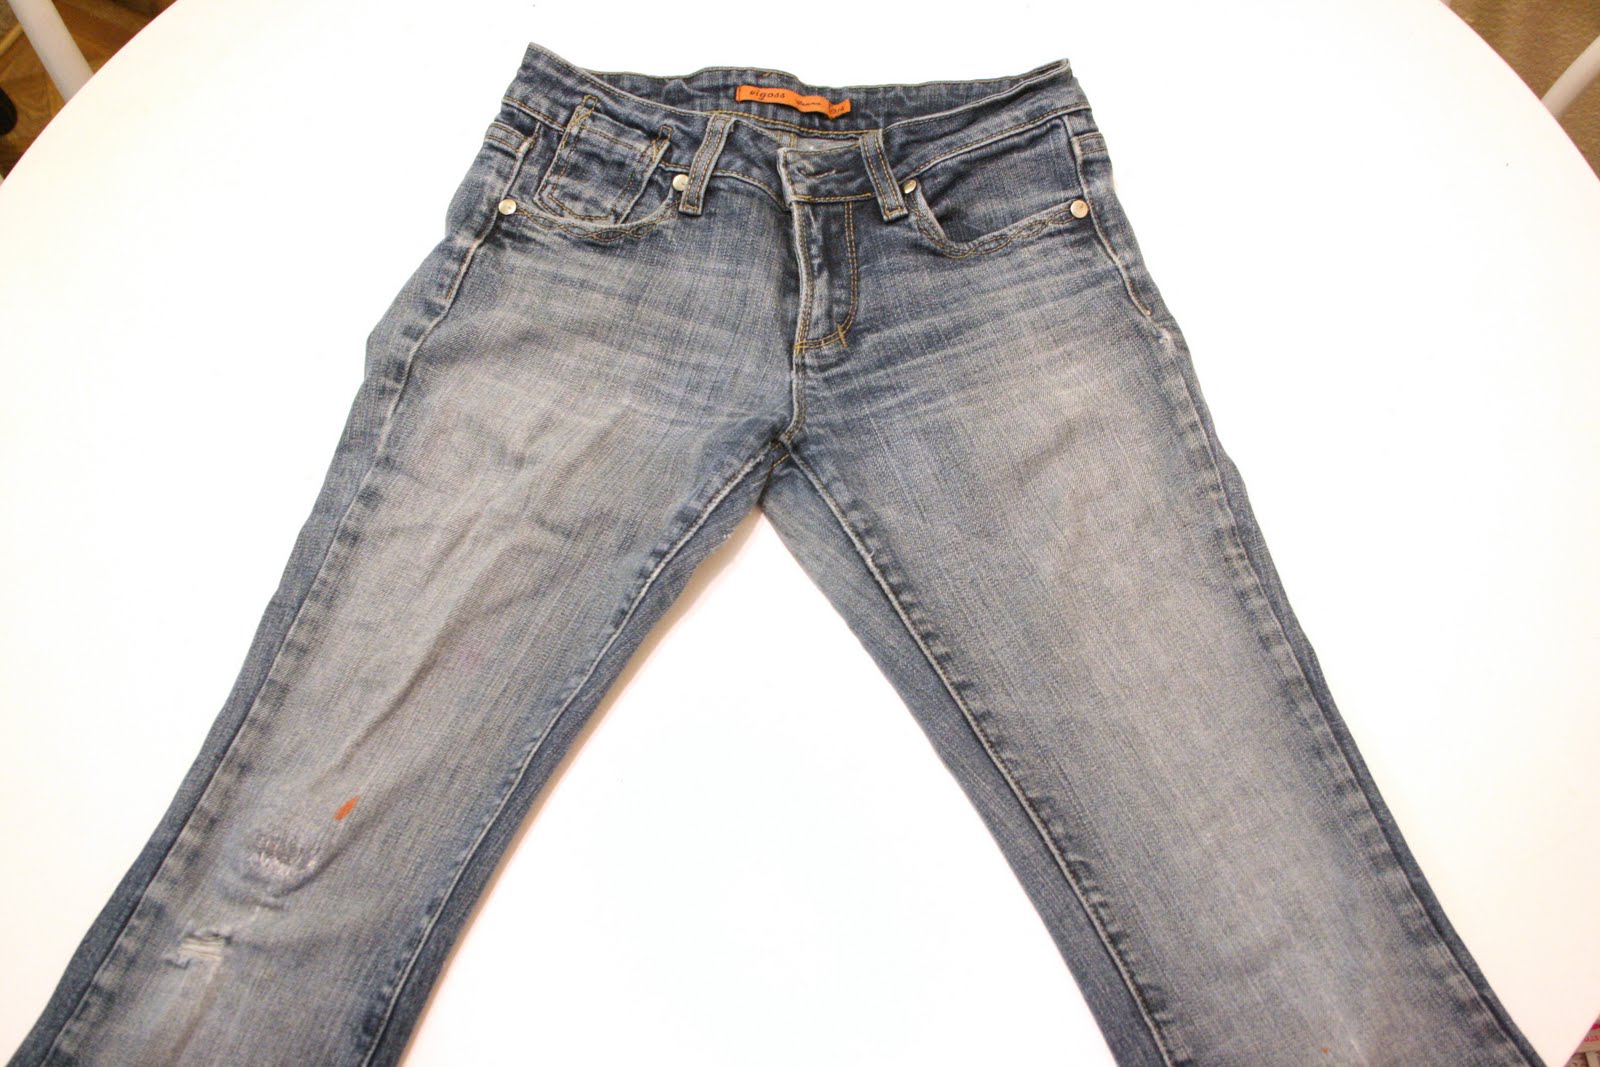 This summer's DIY cut-off jeans shorts--Tutorial! / Create / Enjoy